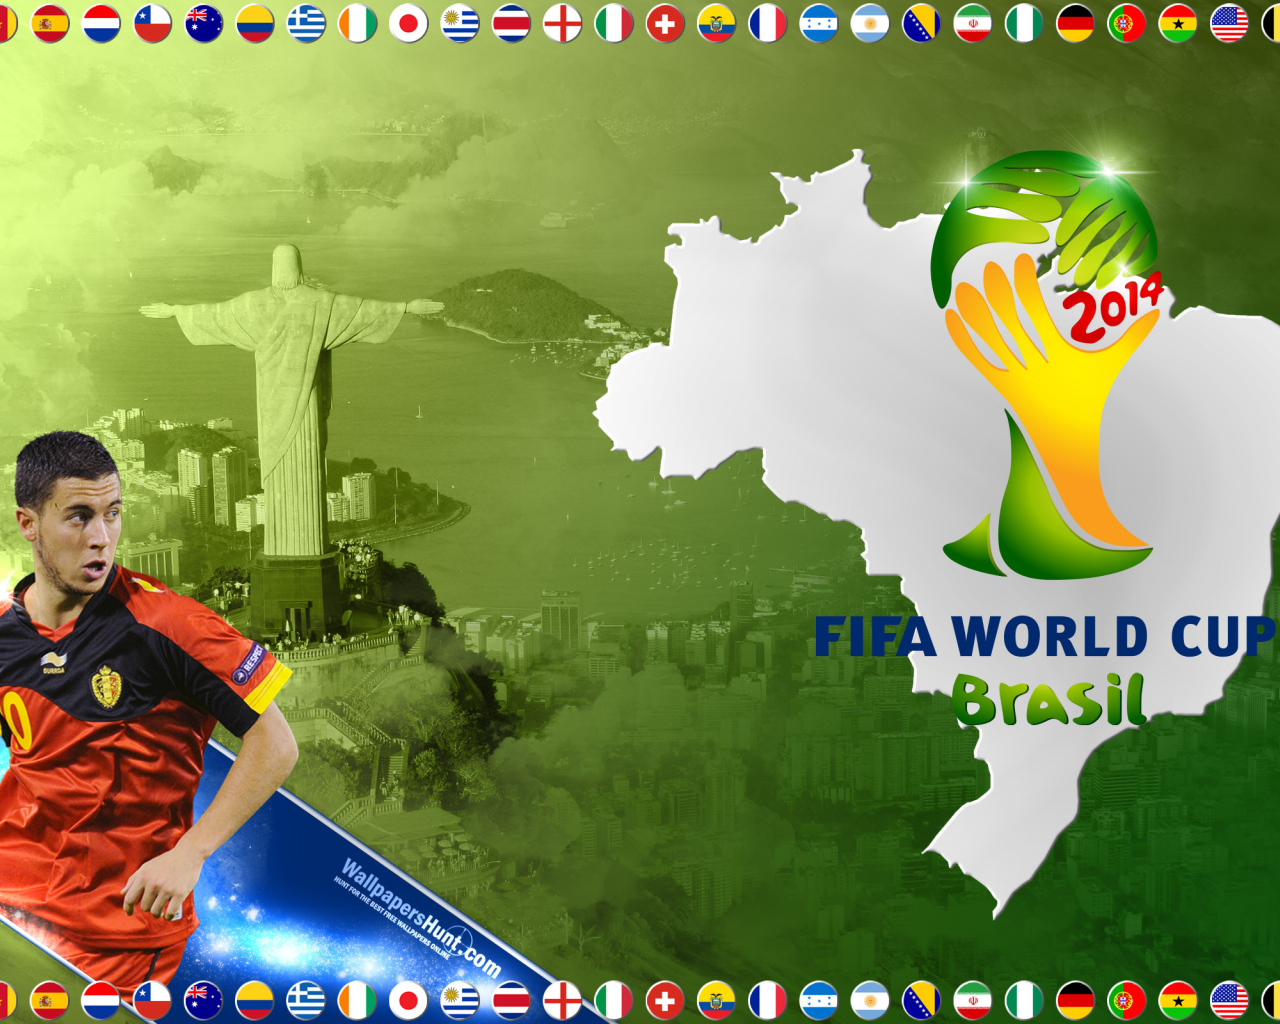 Eden Hazard of Belgium at the World Cup in Brazil 2014